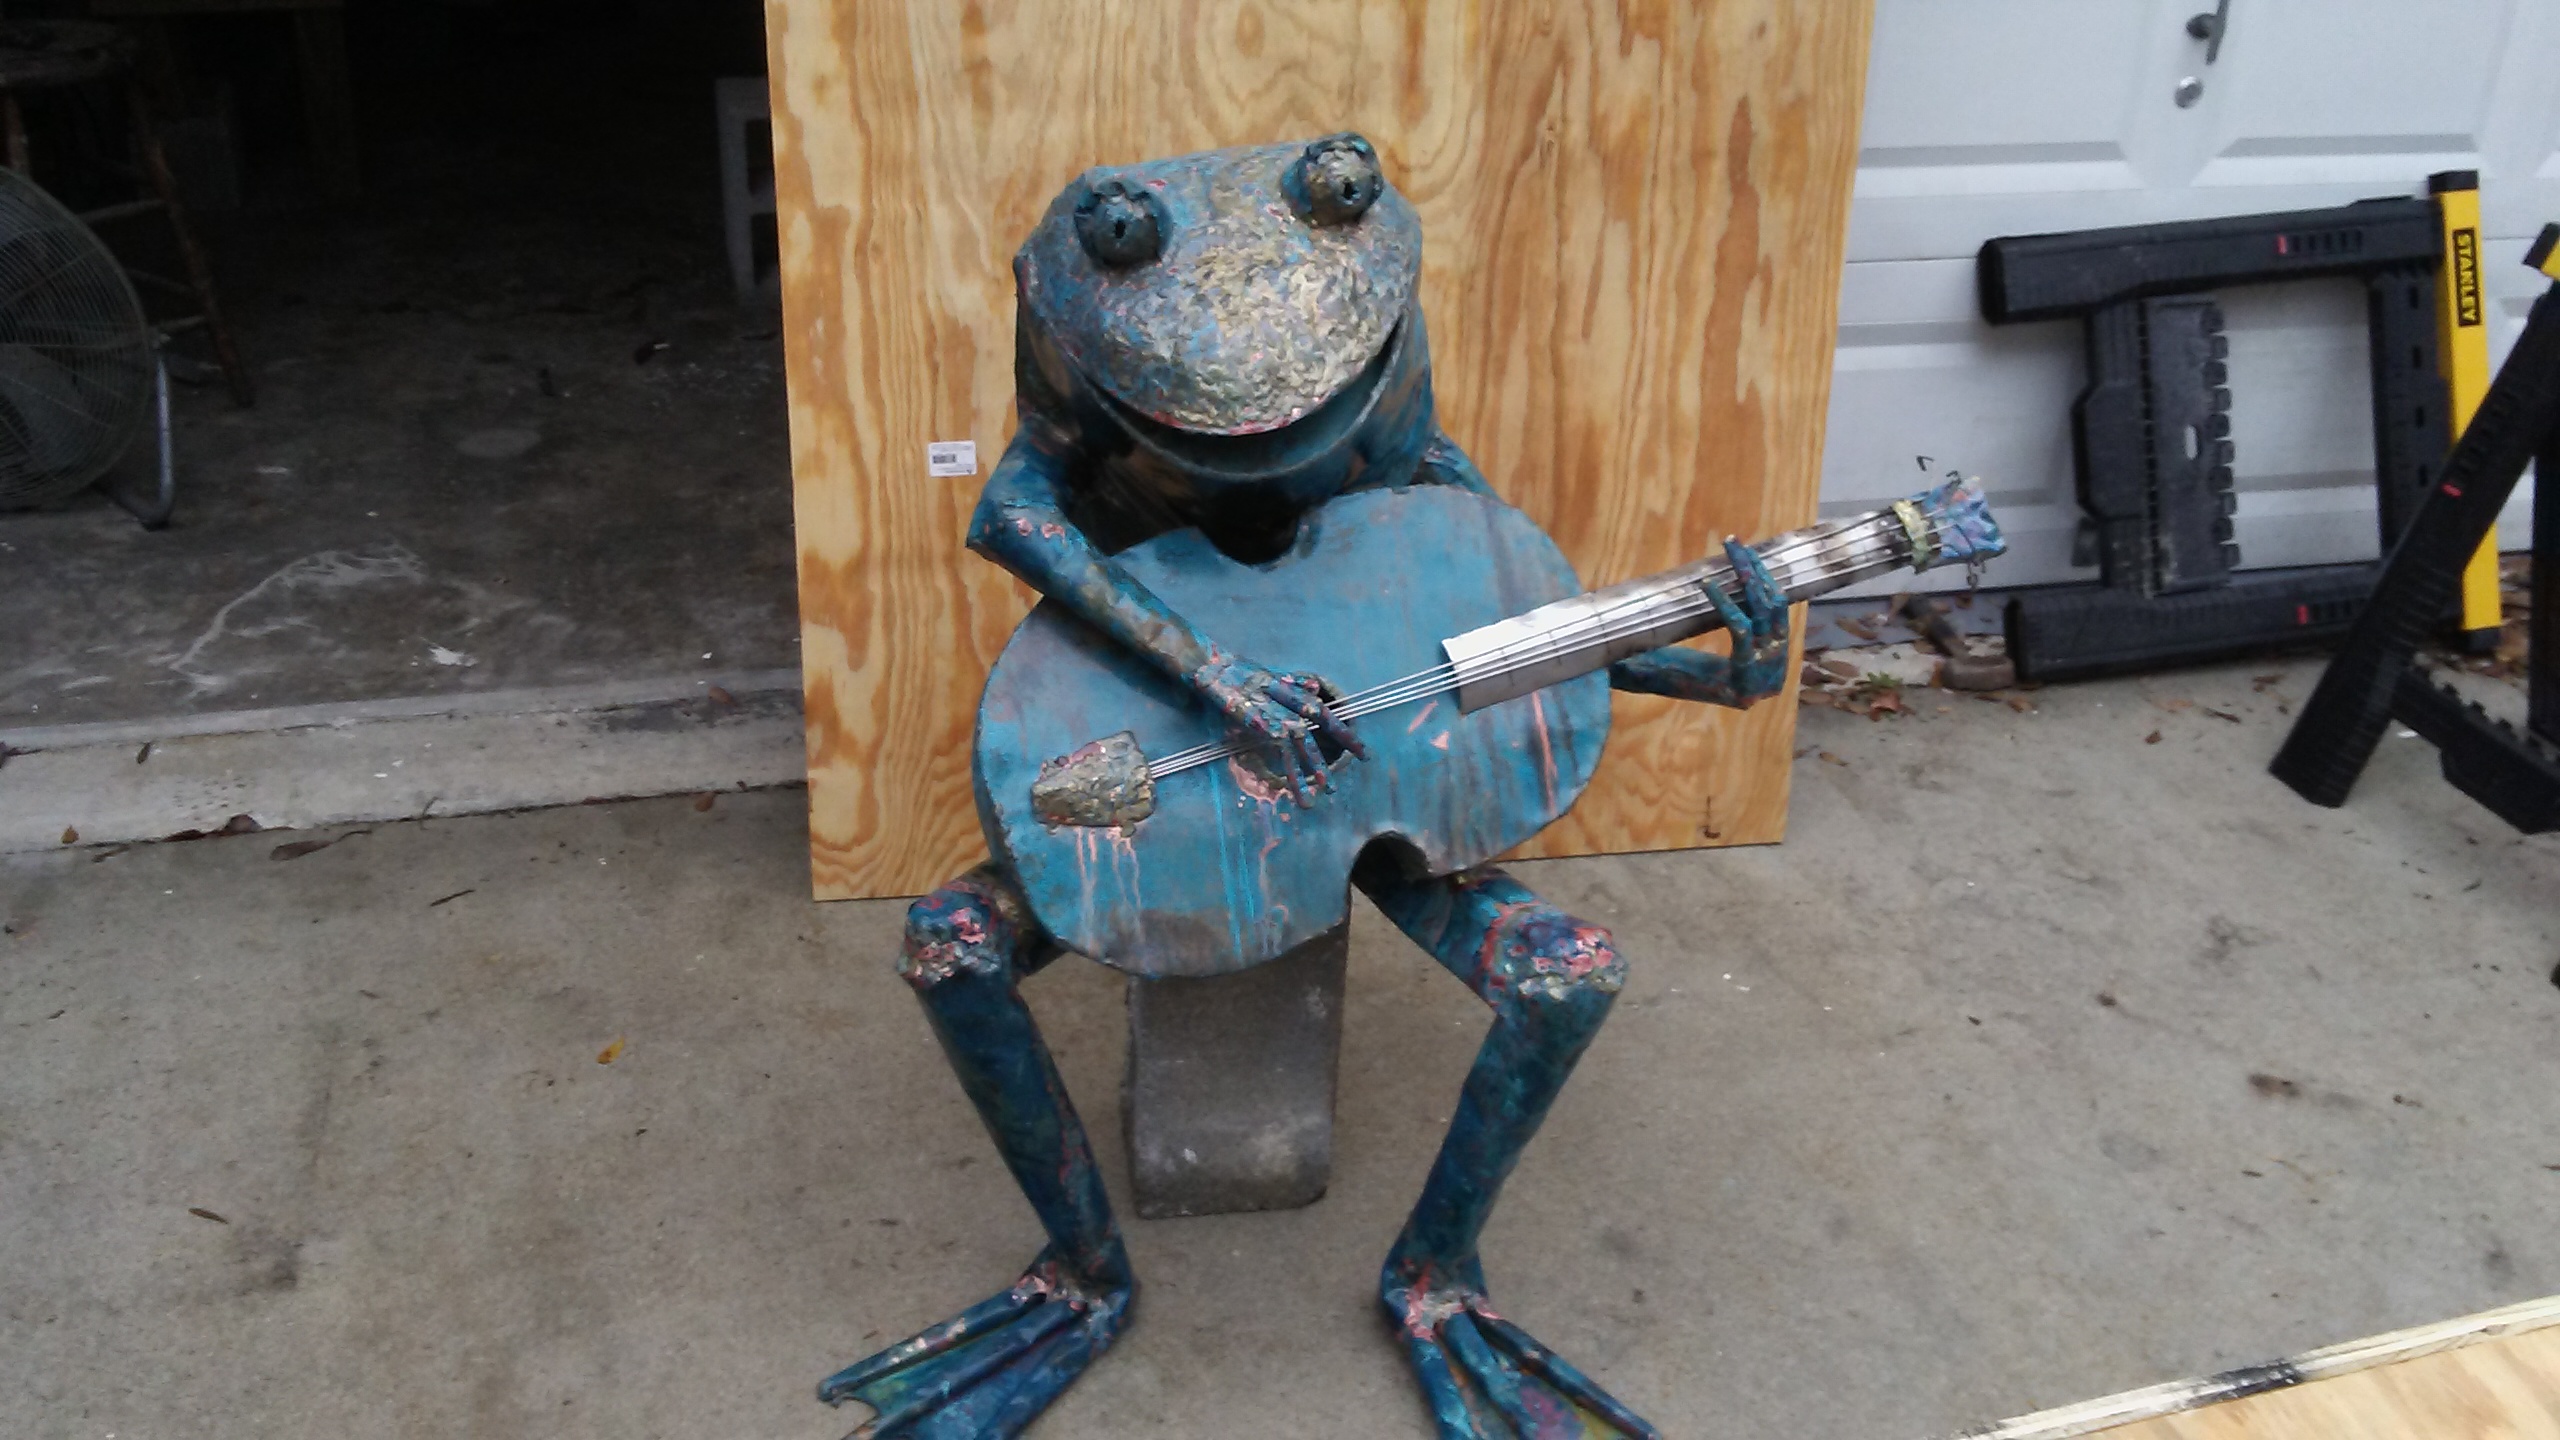 beau-smith-frog-sculpture-guitar-player-12-2016c-1